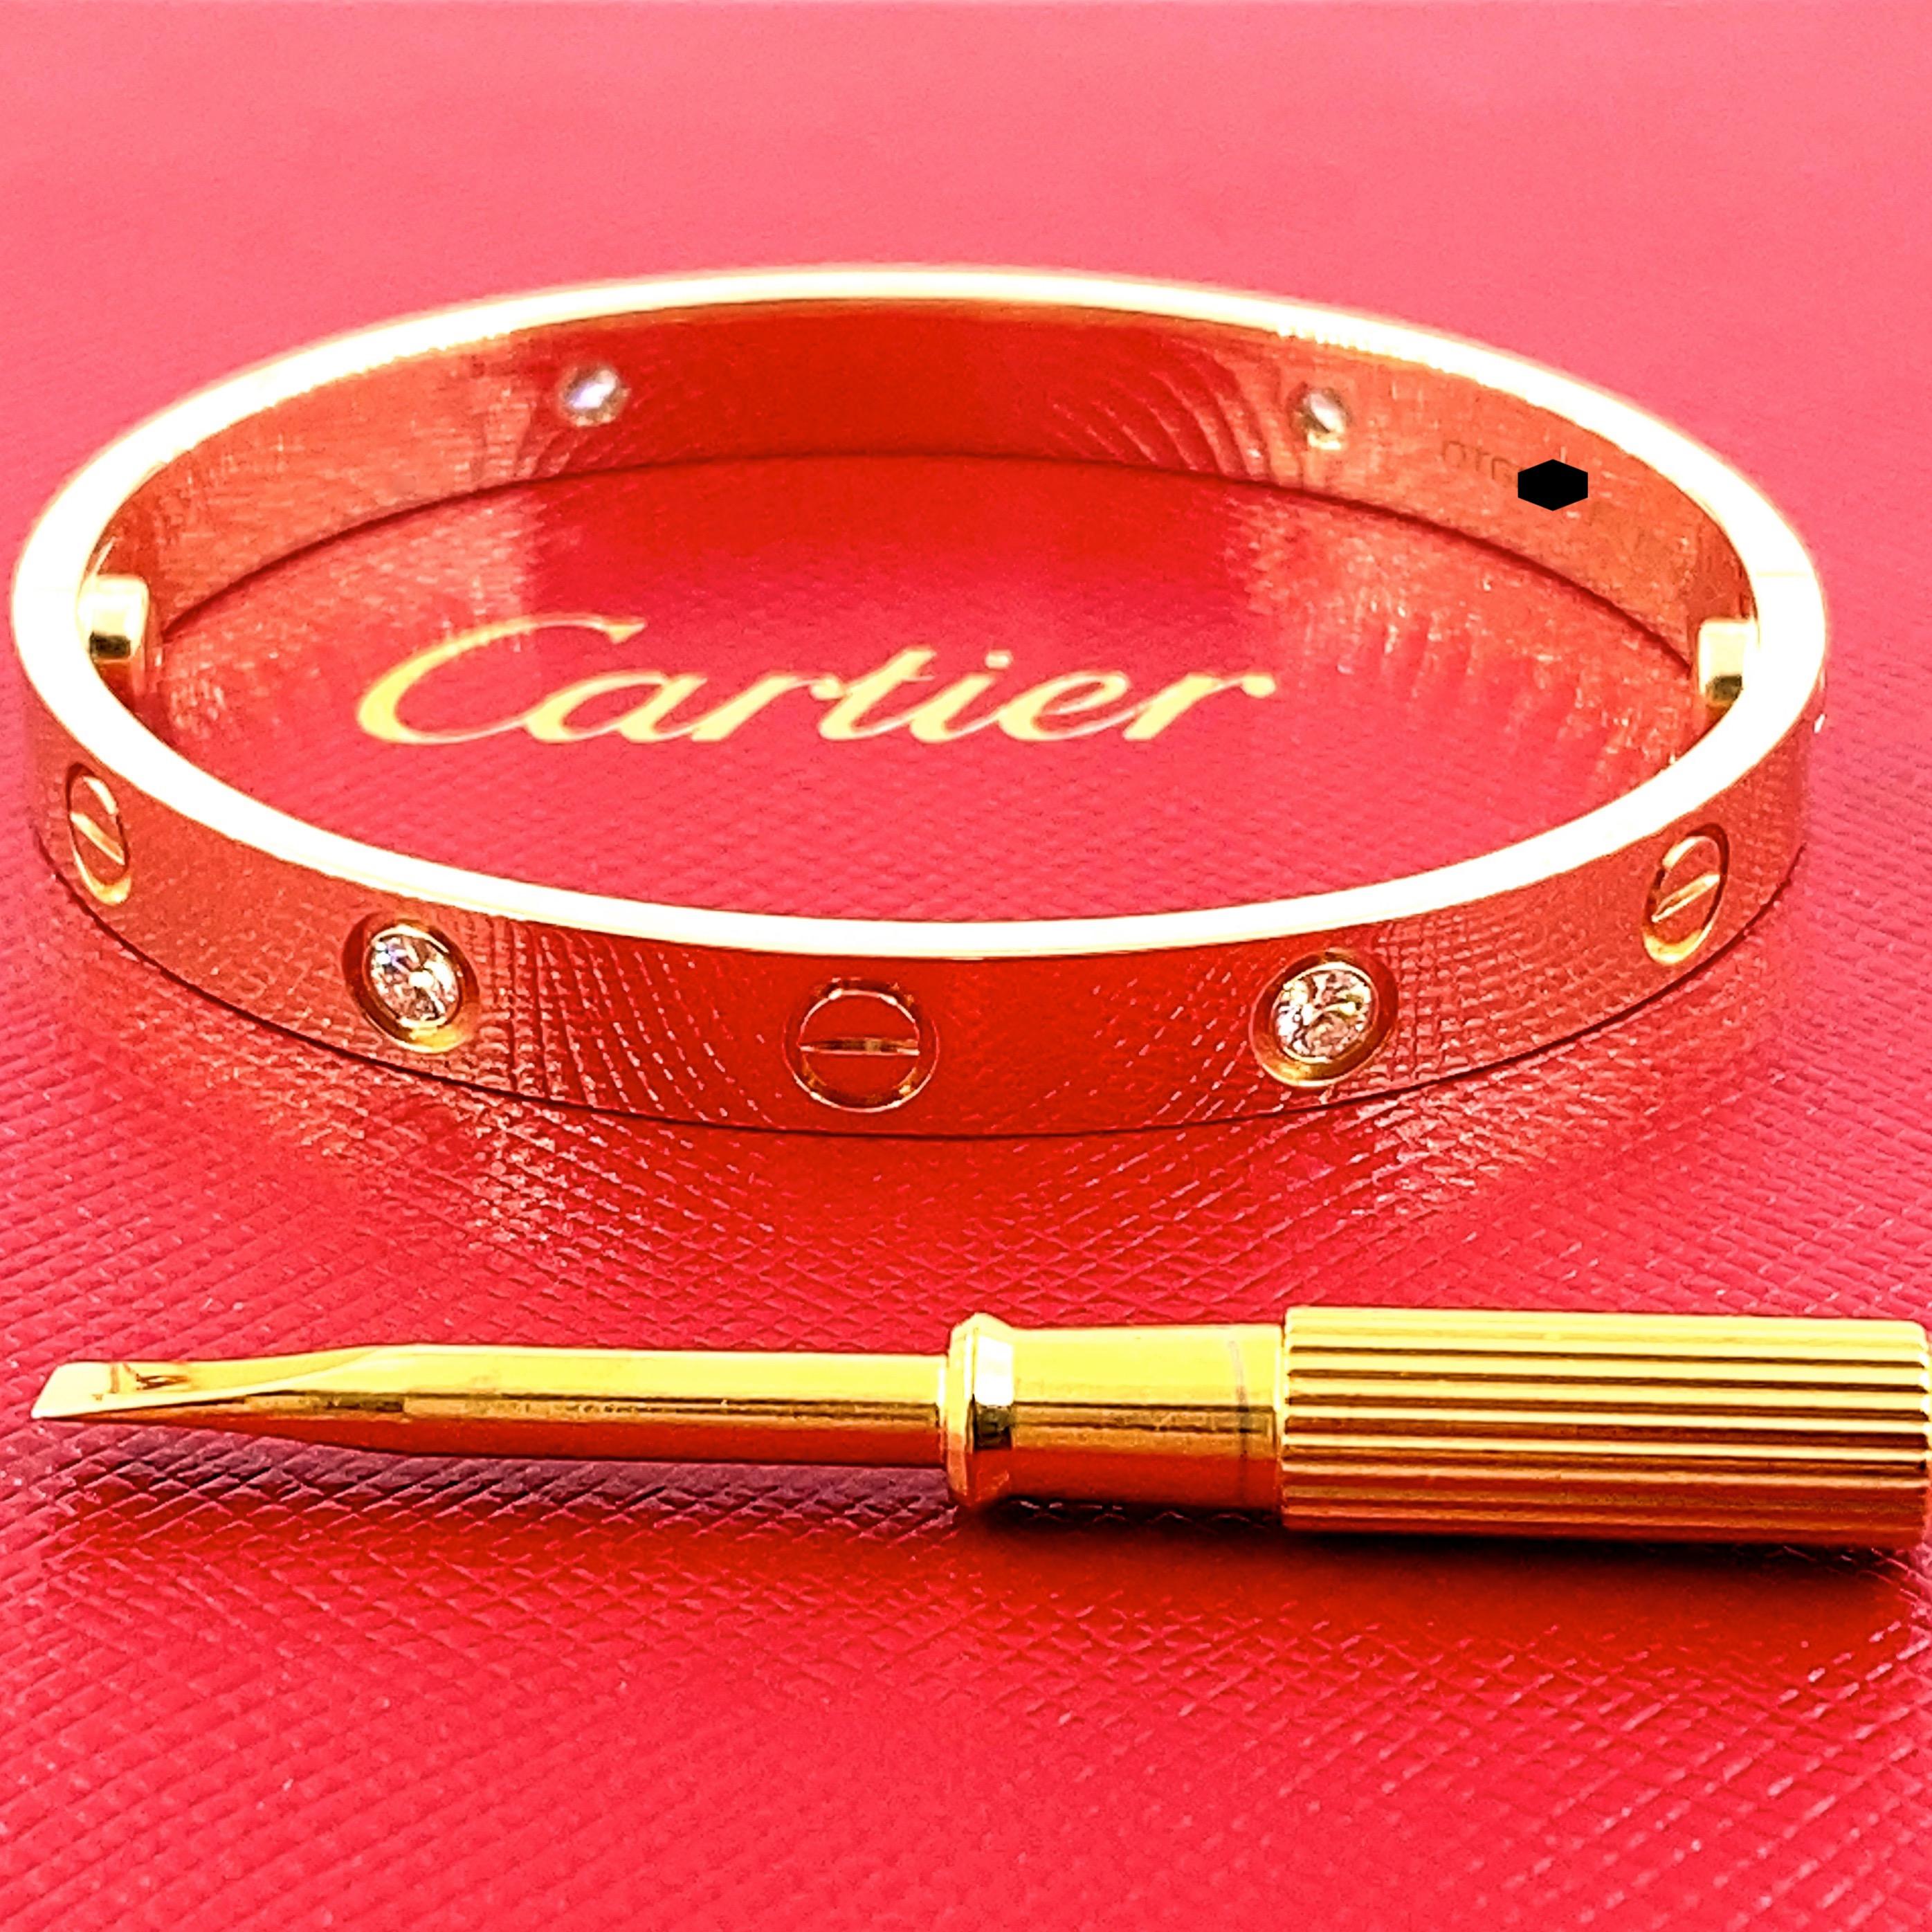 Cartier 4 Diamond Love Bangle Bracelet with Box 18kt Yellow Gold SZ 16 For Sale 5